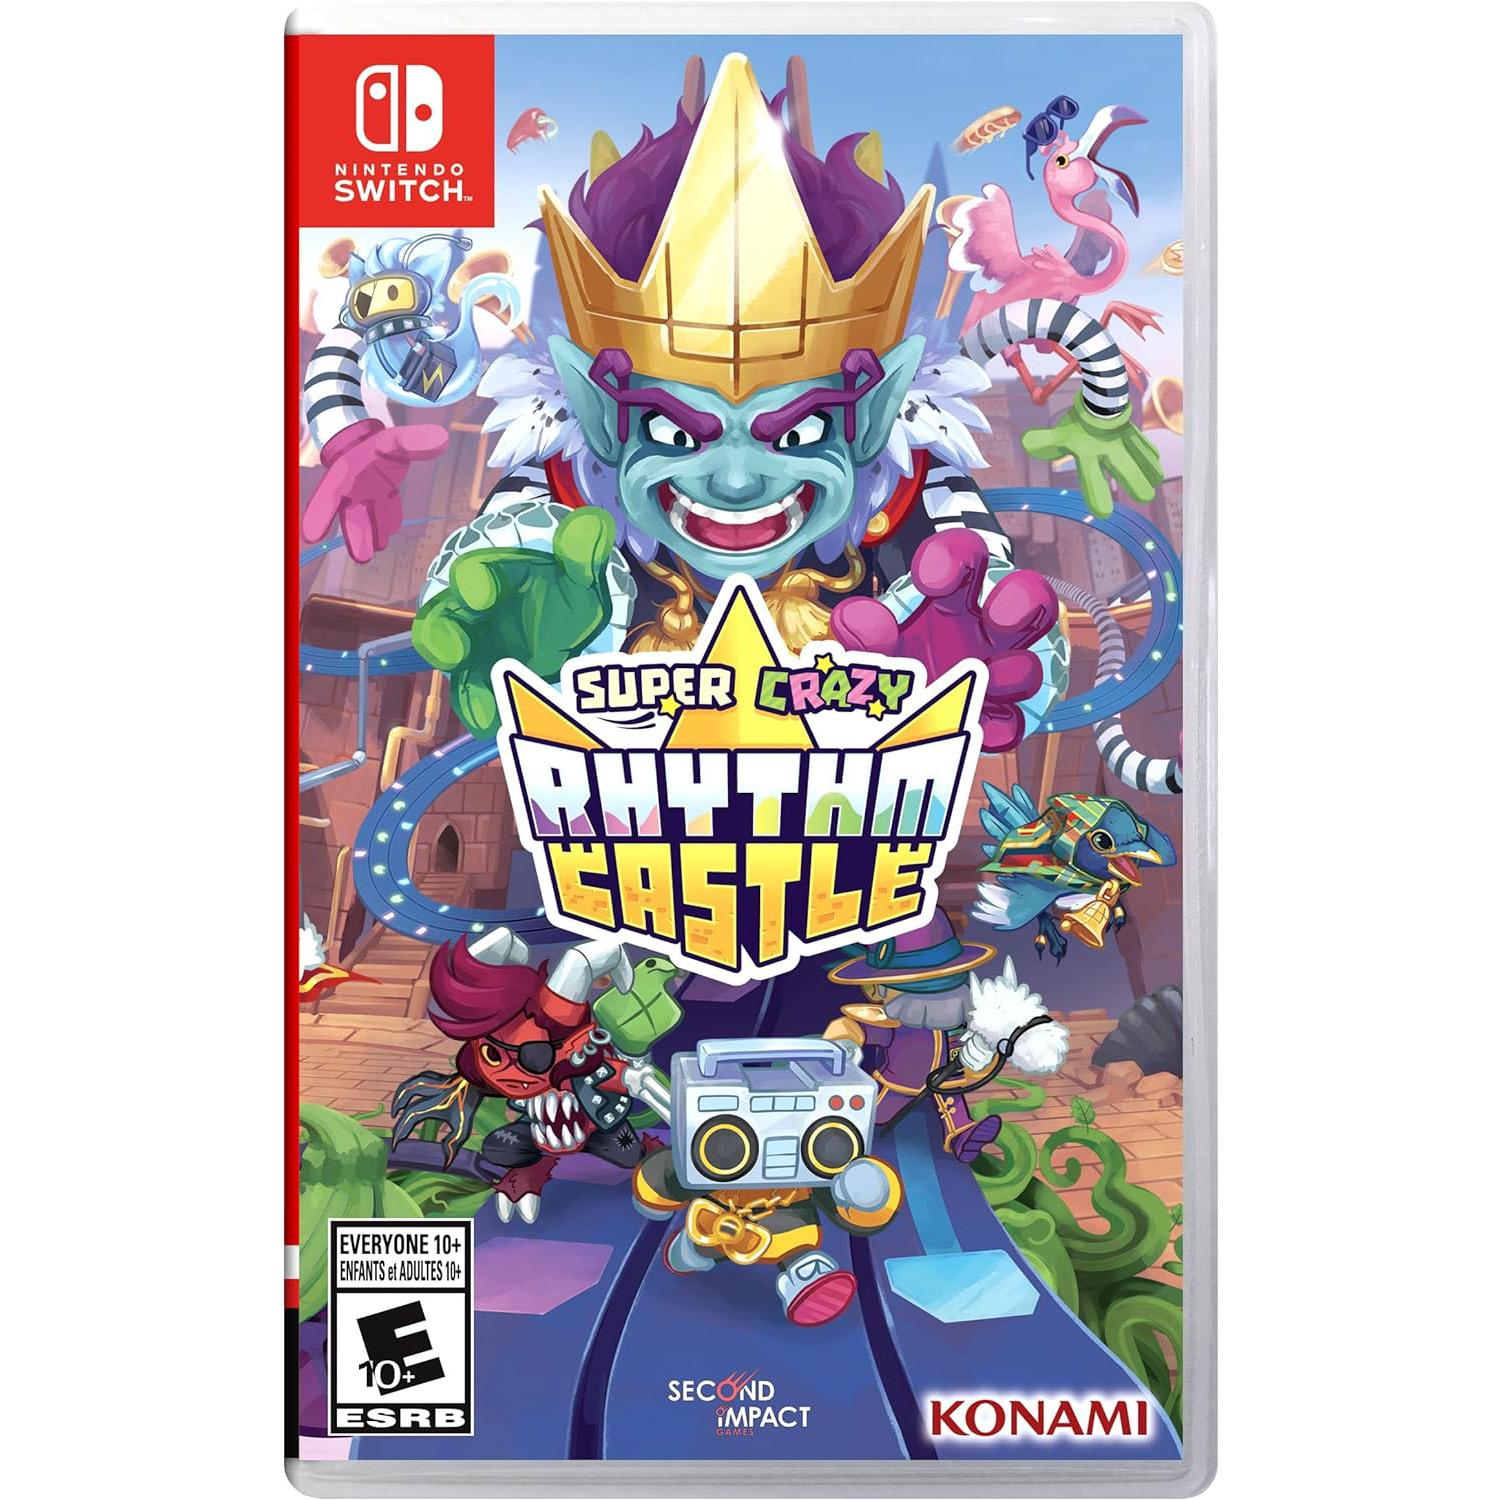 Super Crazy Rhythm Castle Nintendo Switch for $19.99